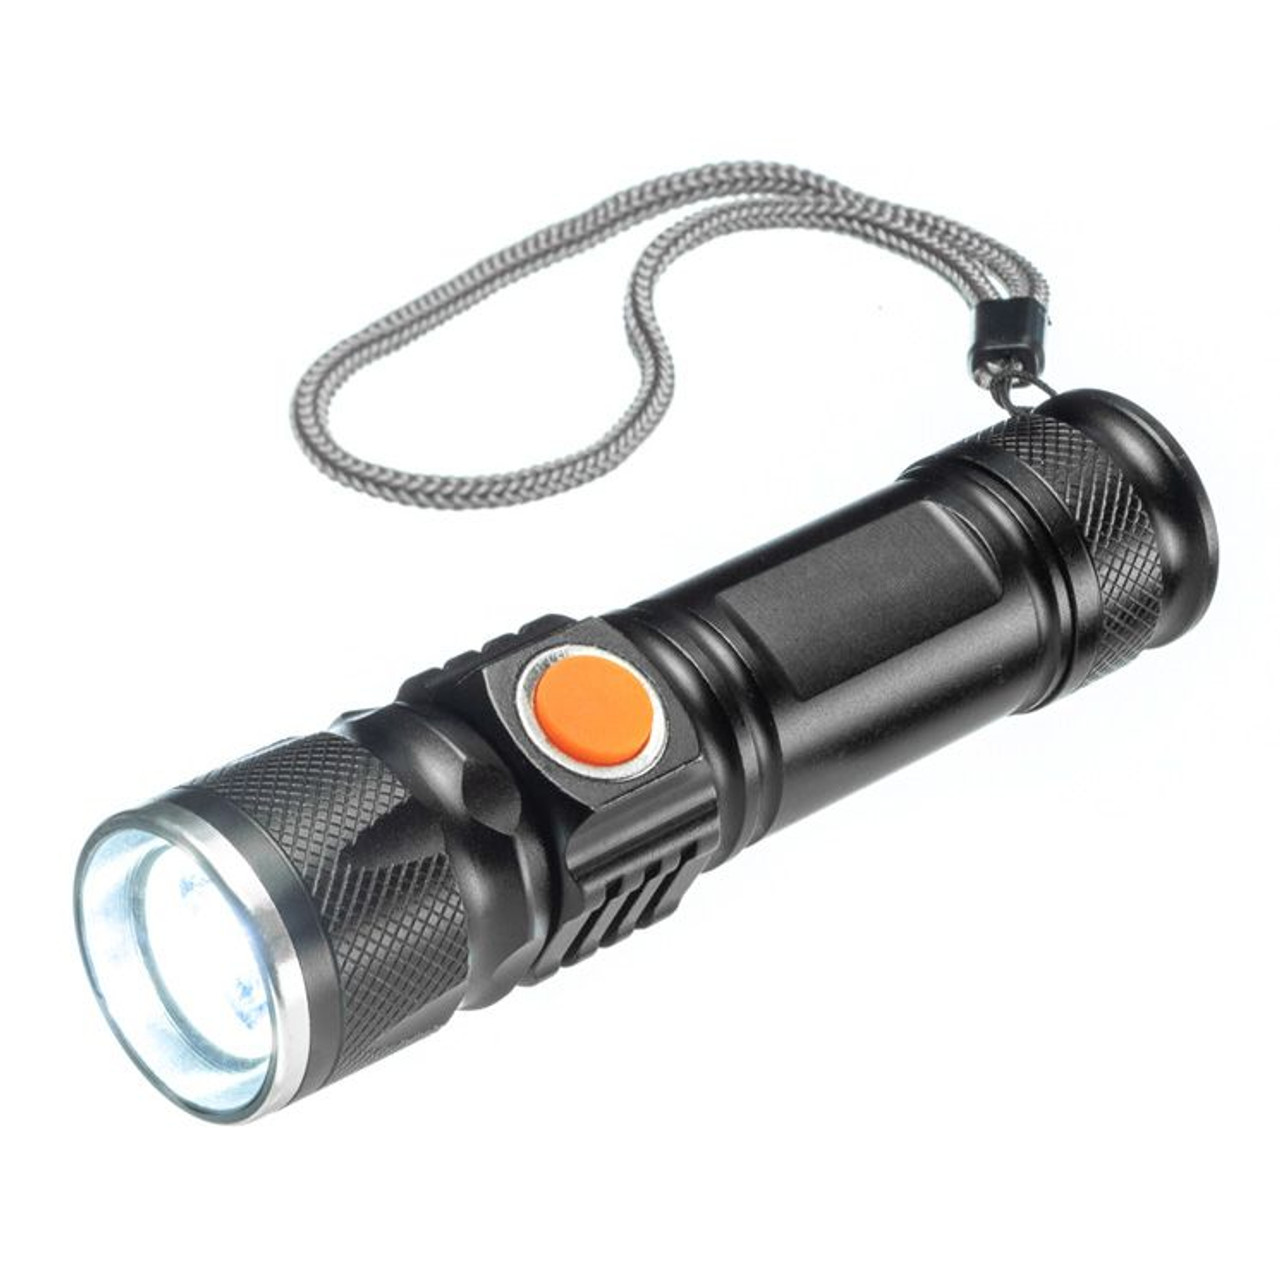 USB Rechargeable Flashlight - - Beam - 3 Light Modes - Emergency Flashlights